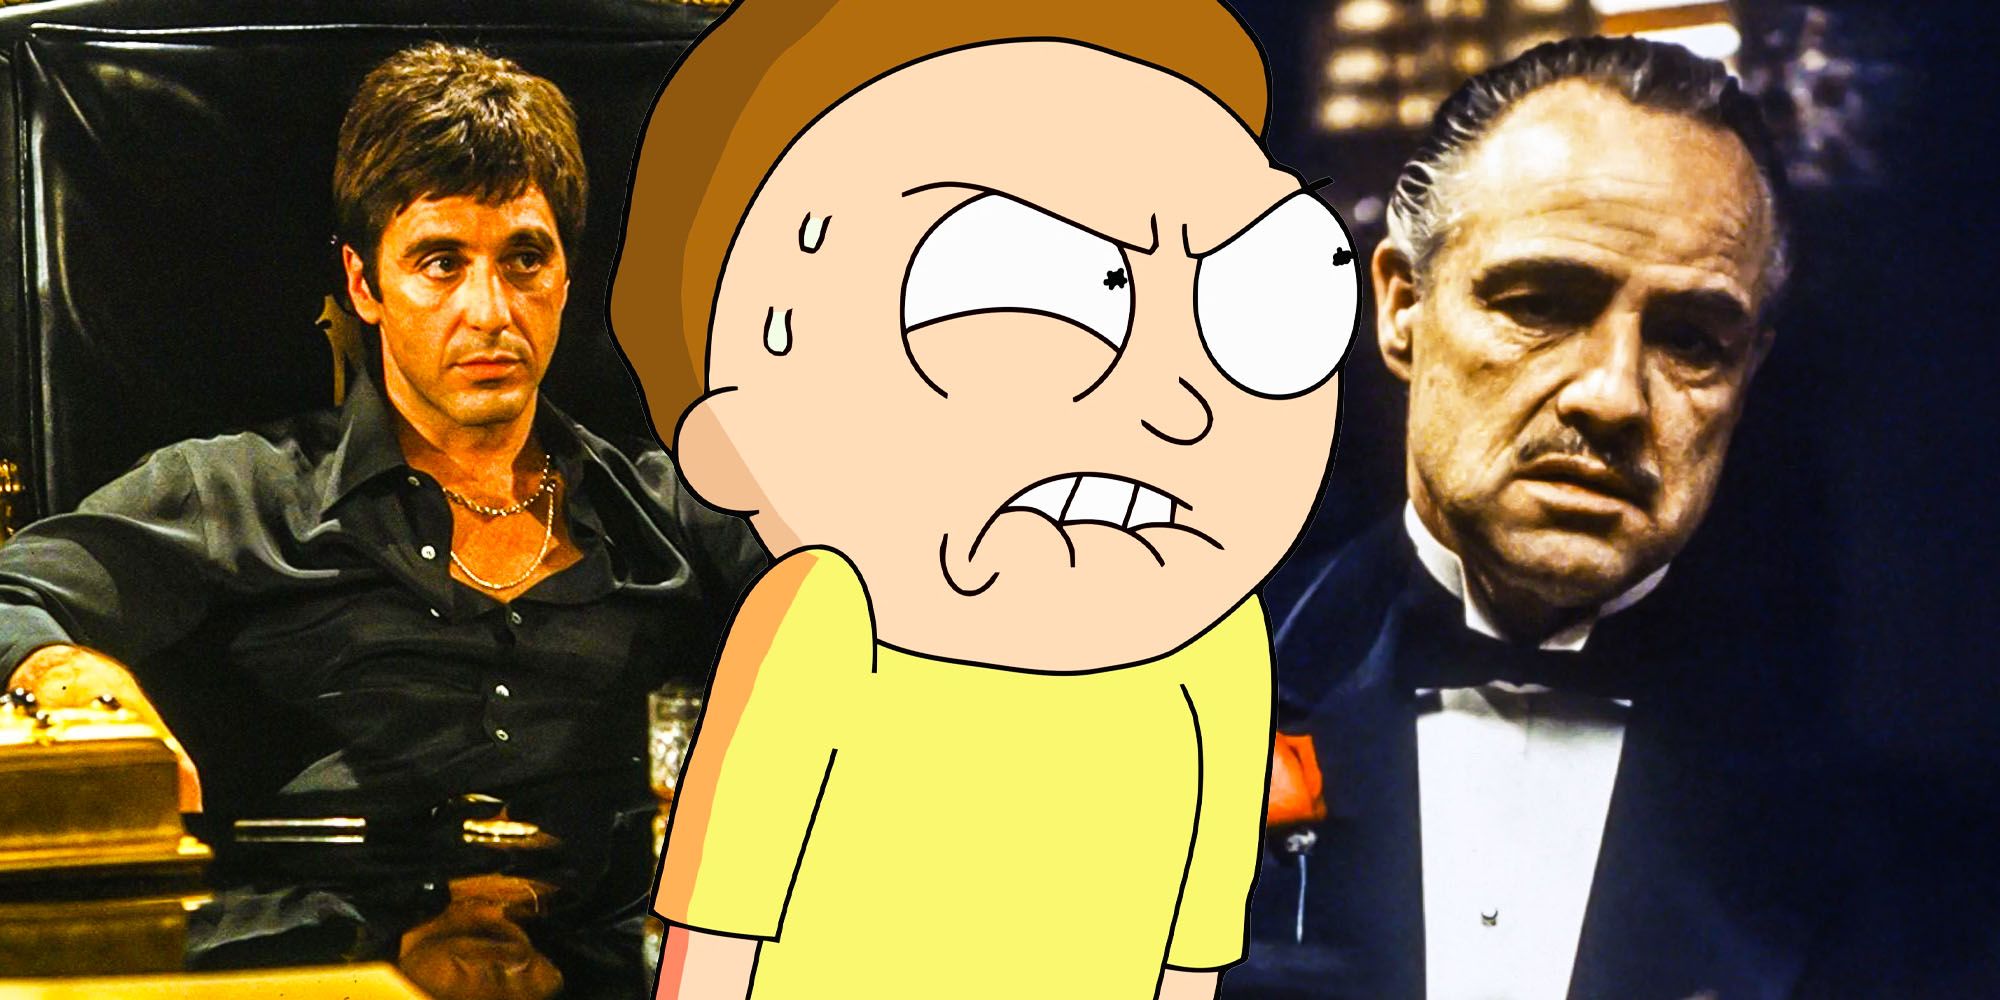 Rick and morty season 5 mafia movie references Scarface The Godfather